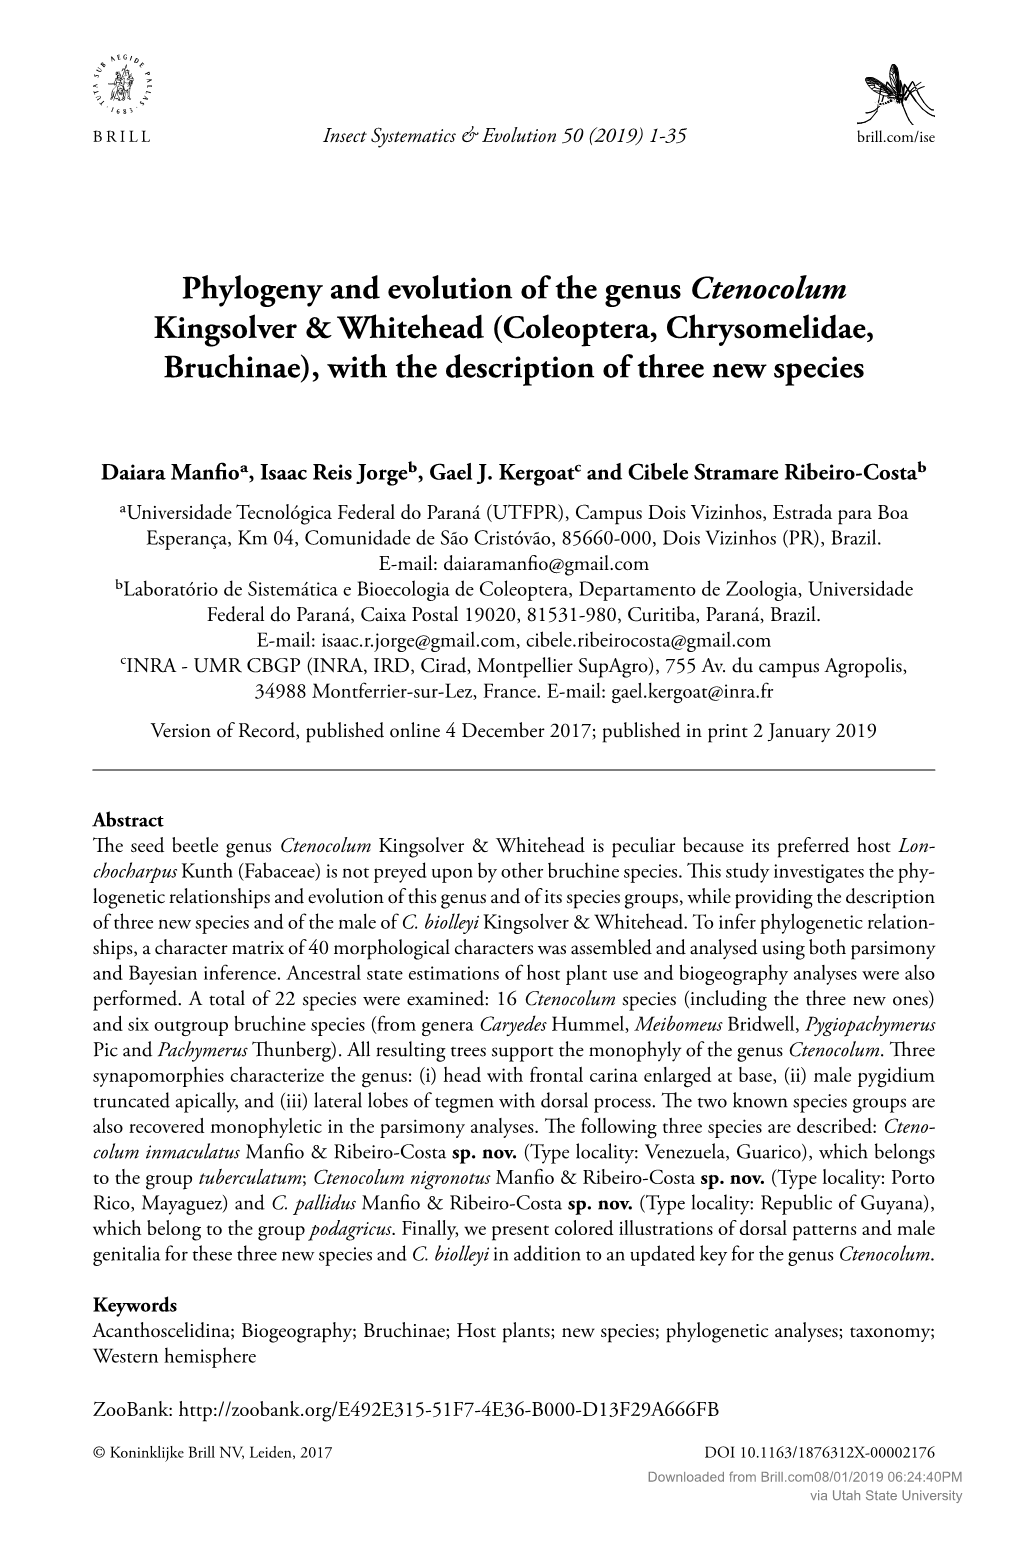 Phylogeny and Evolution of the Genus Ctenocolum Kingsolver & Whitehead